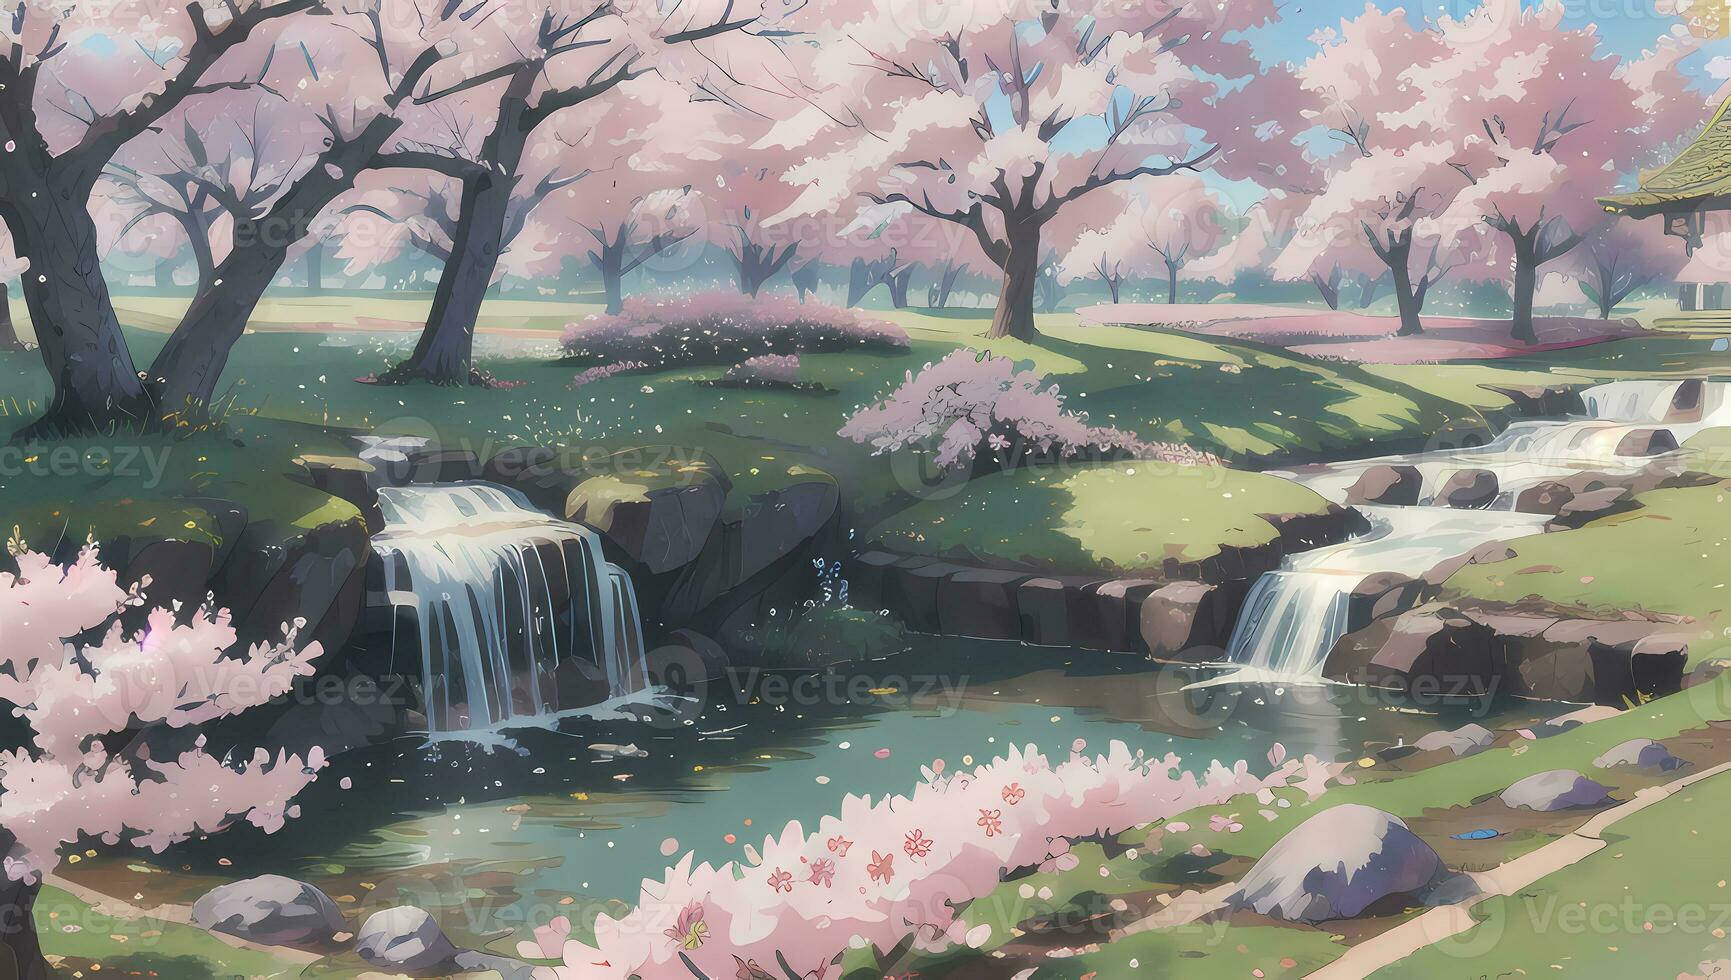 sakura giardino durante primavera tempo visivo romanzo anime manga sfondo sfondo foto